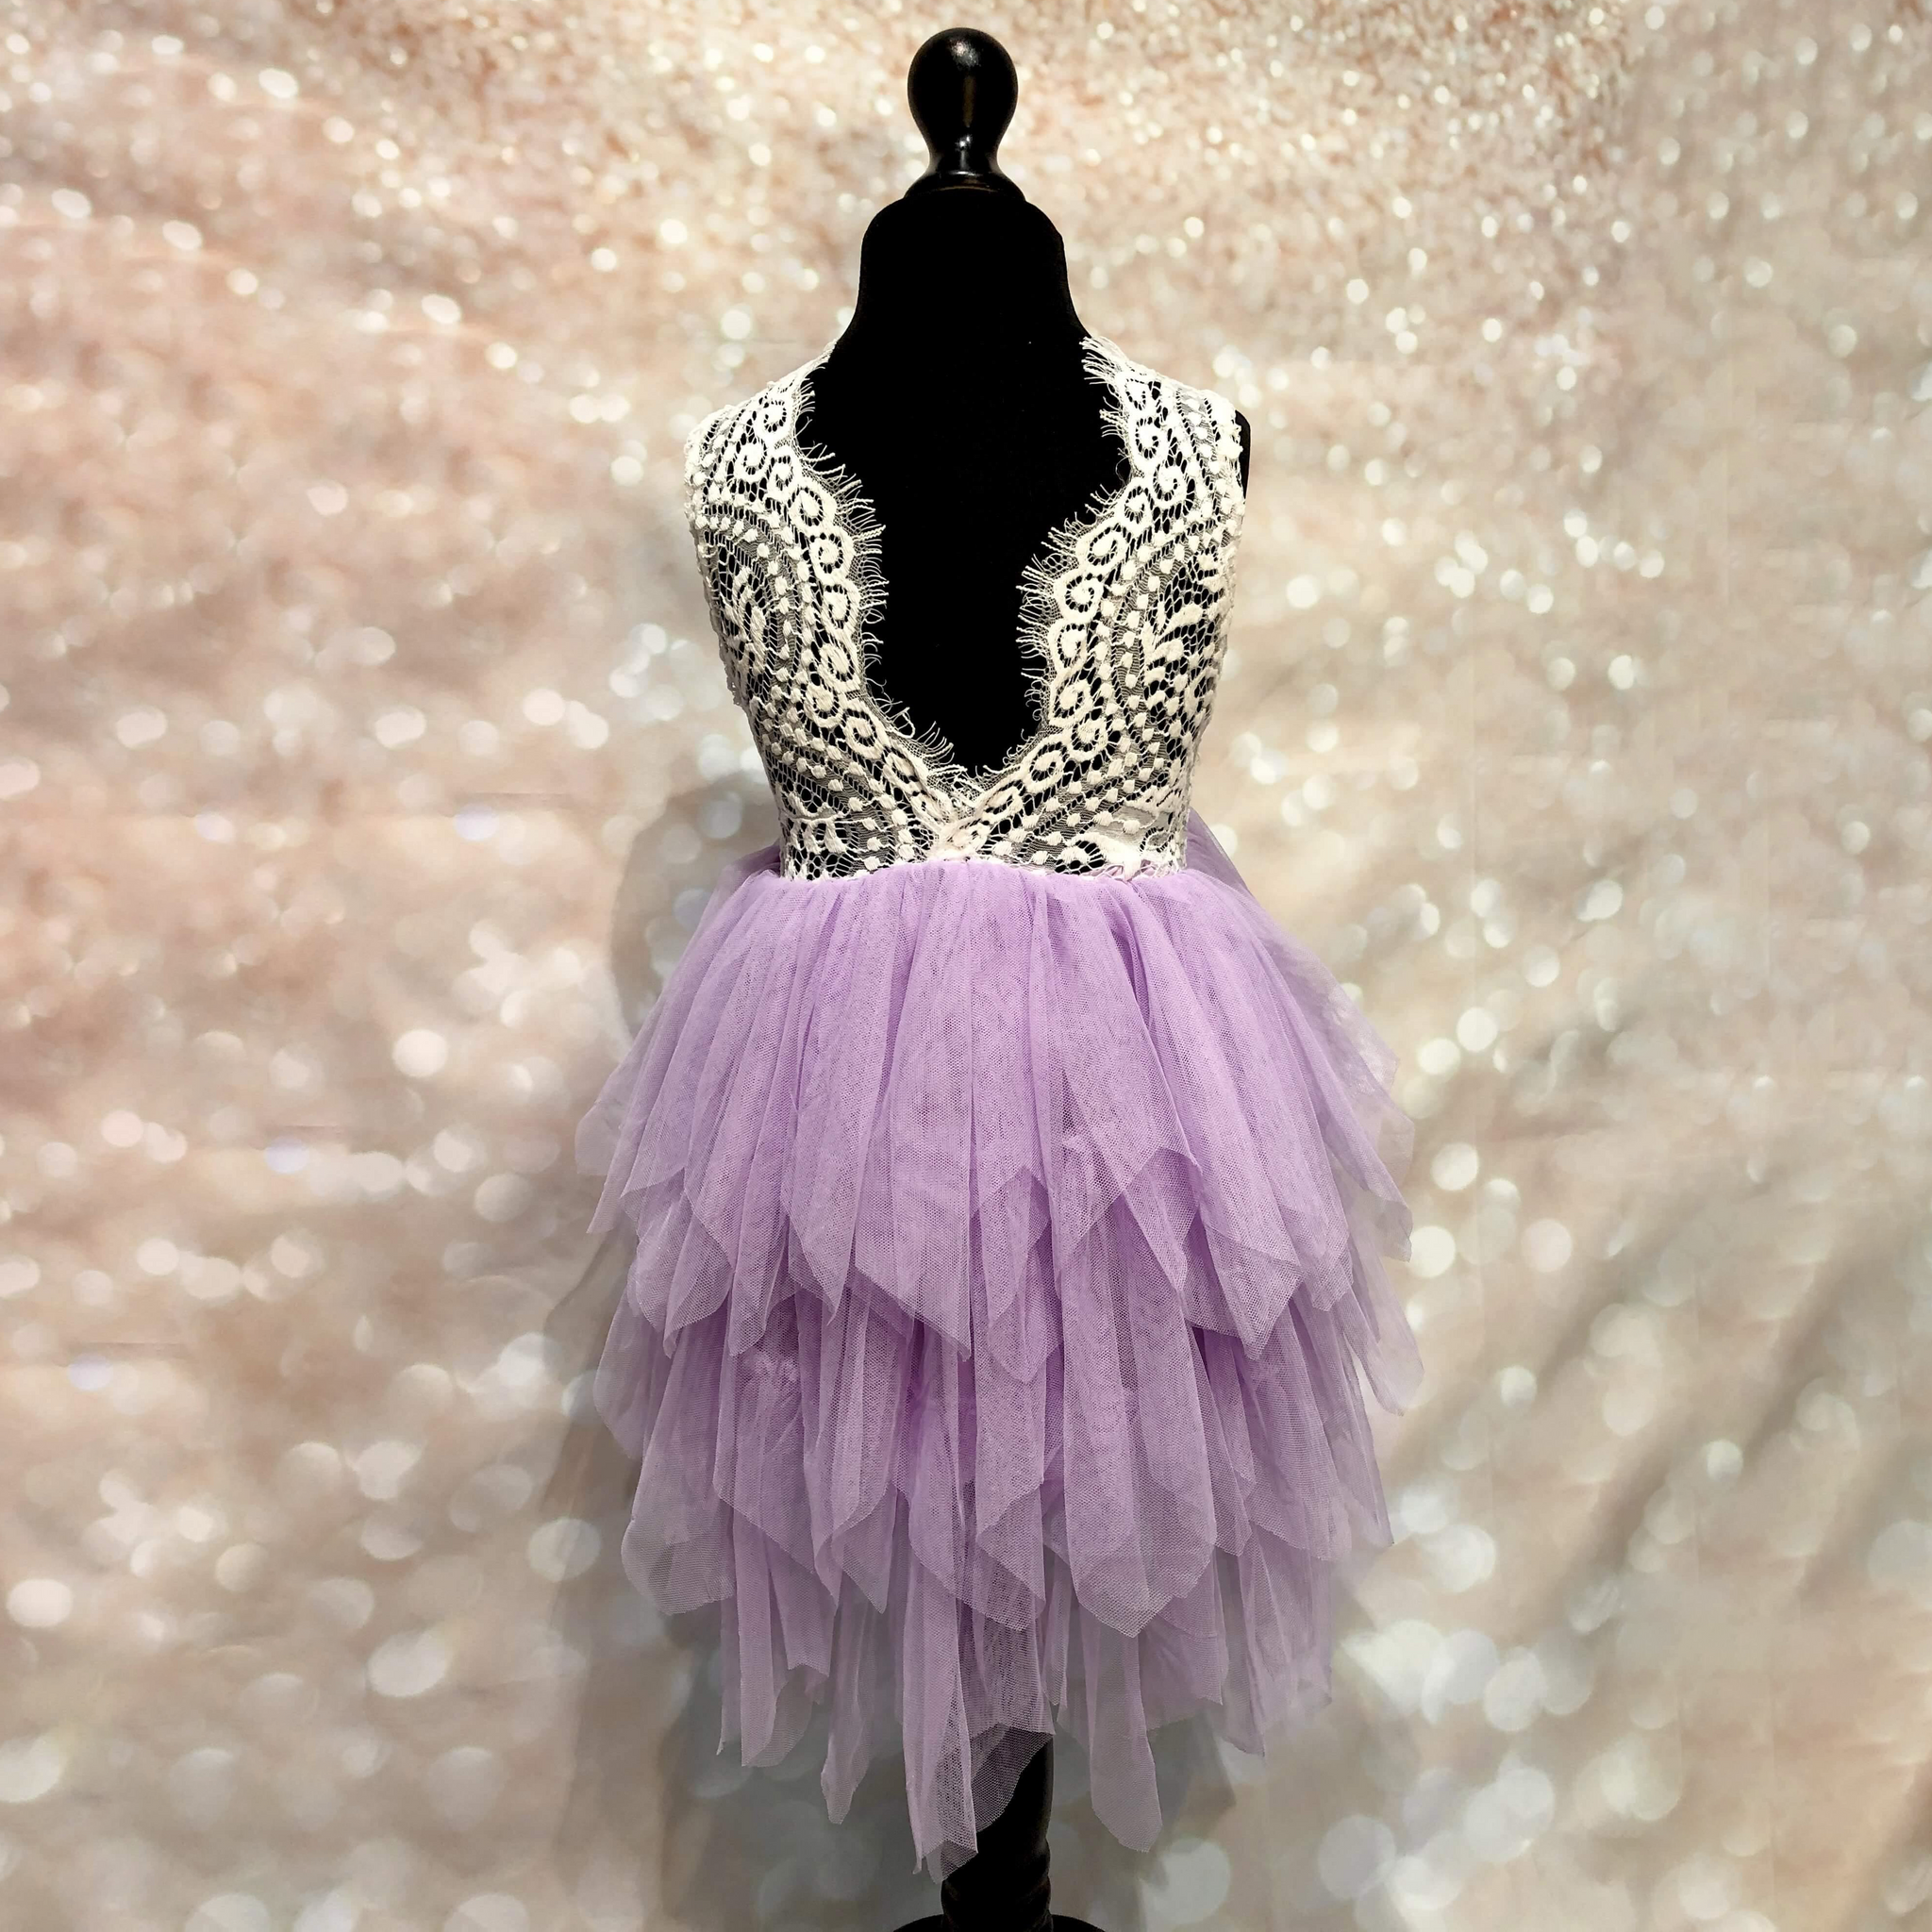 Boho Dreams Dress - Lilac Applique - UK Flower Girl Boutique 